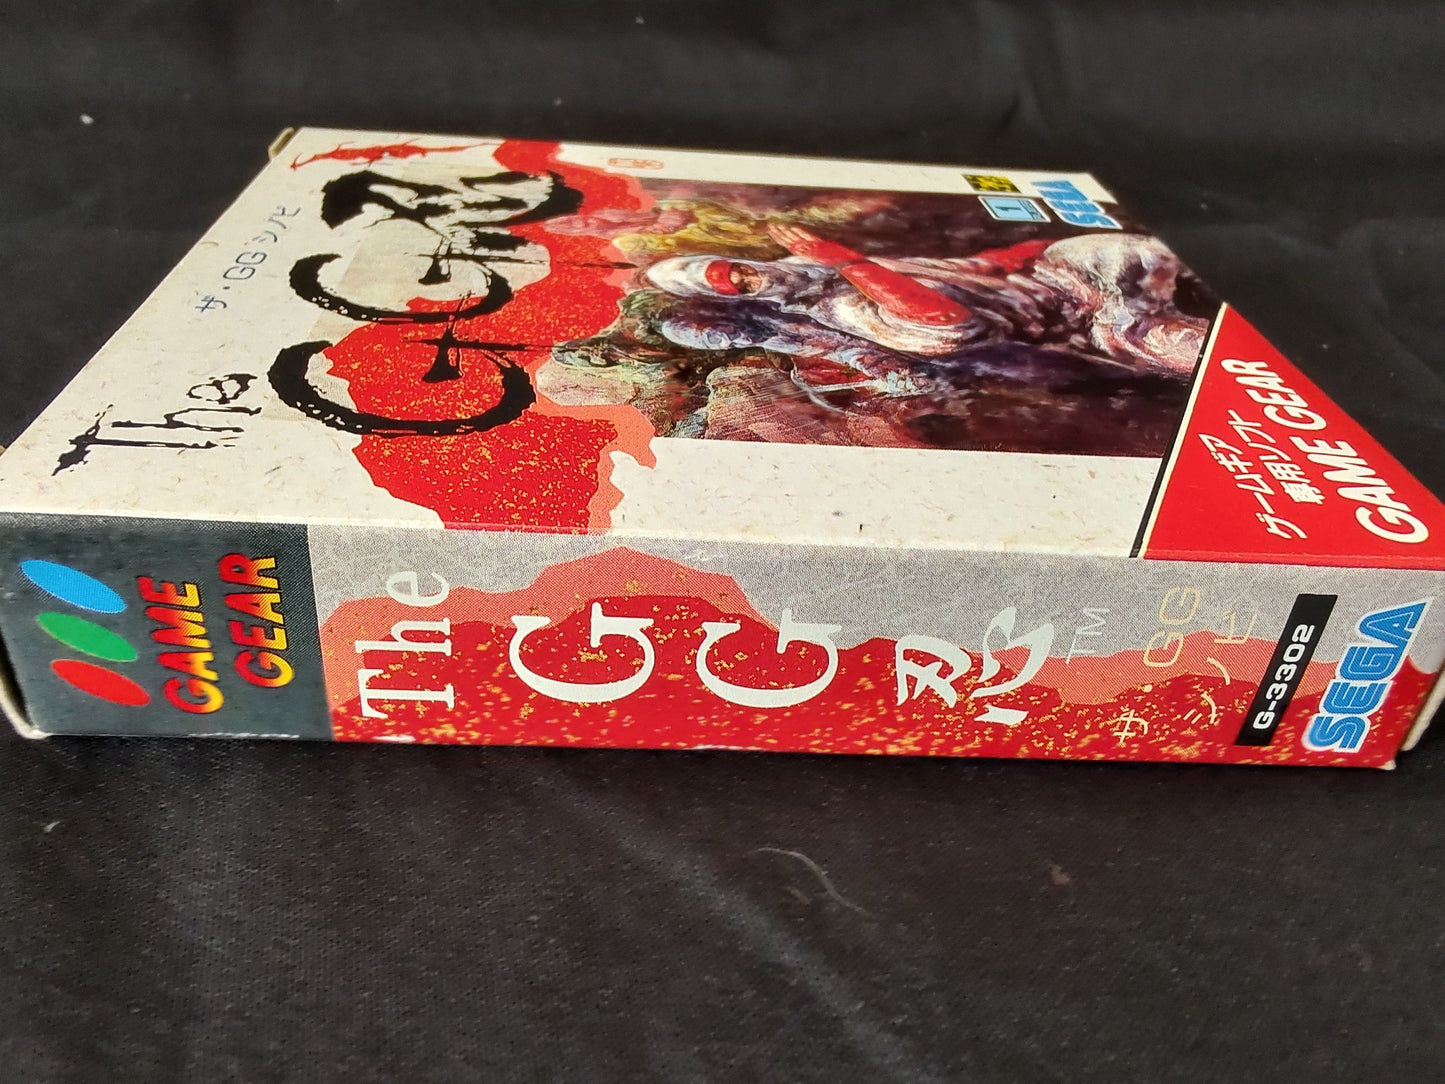 The GG Shinobi SEGA GAME GEAR GG Cartridge,Manual,Boxed set tested-f0416-2